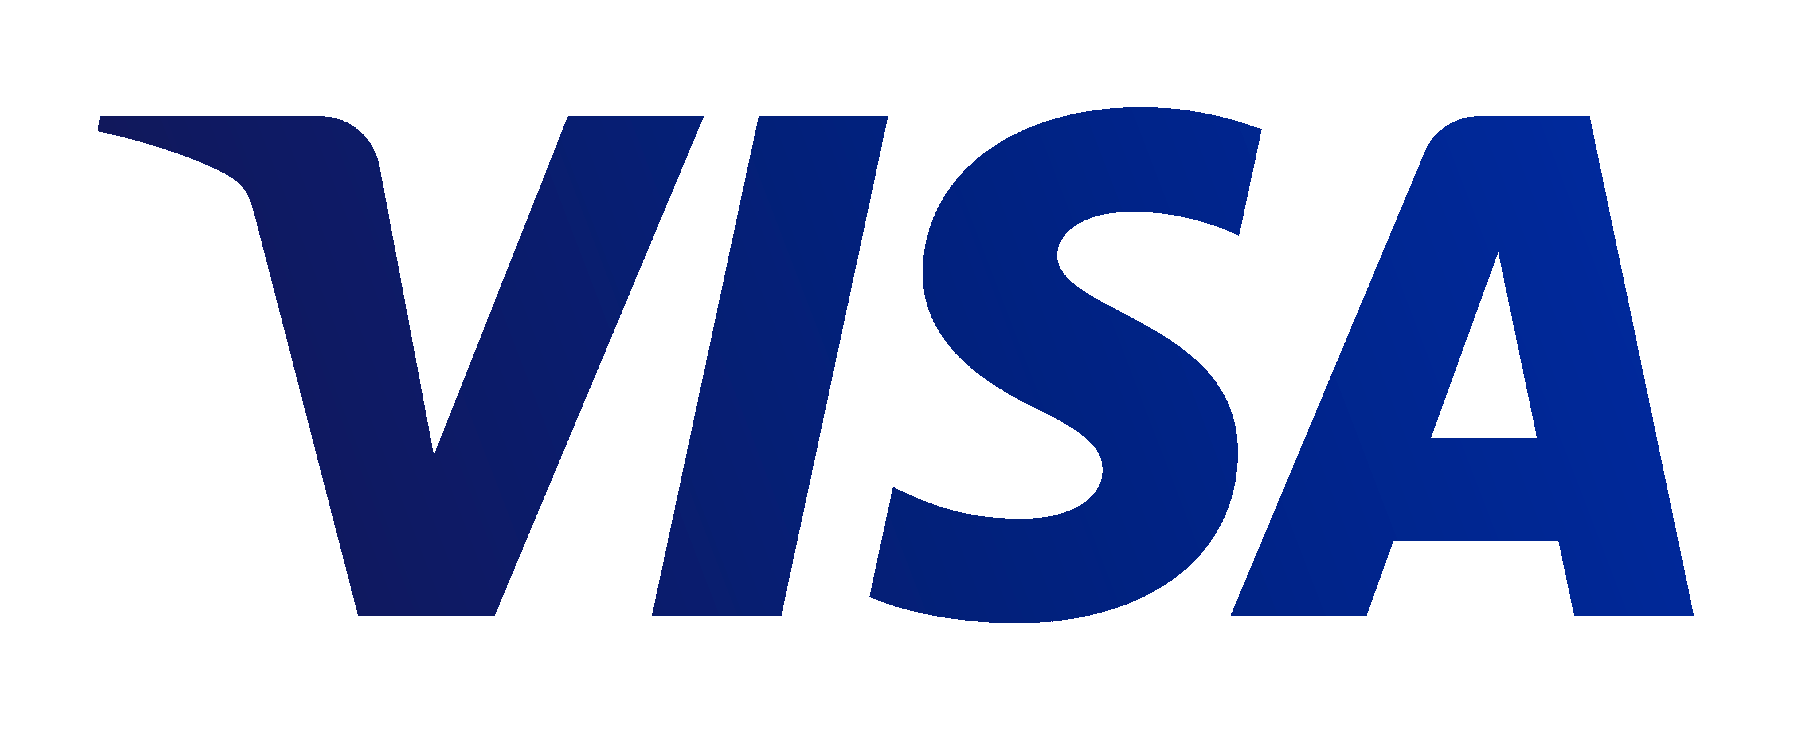 Download Visa Logo Png Image 